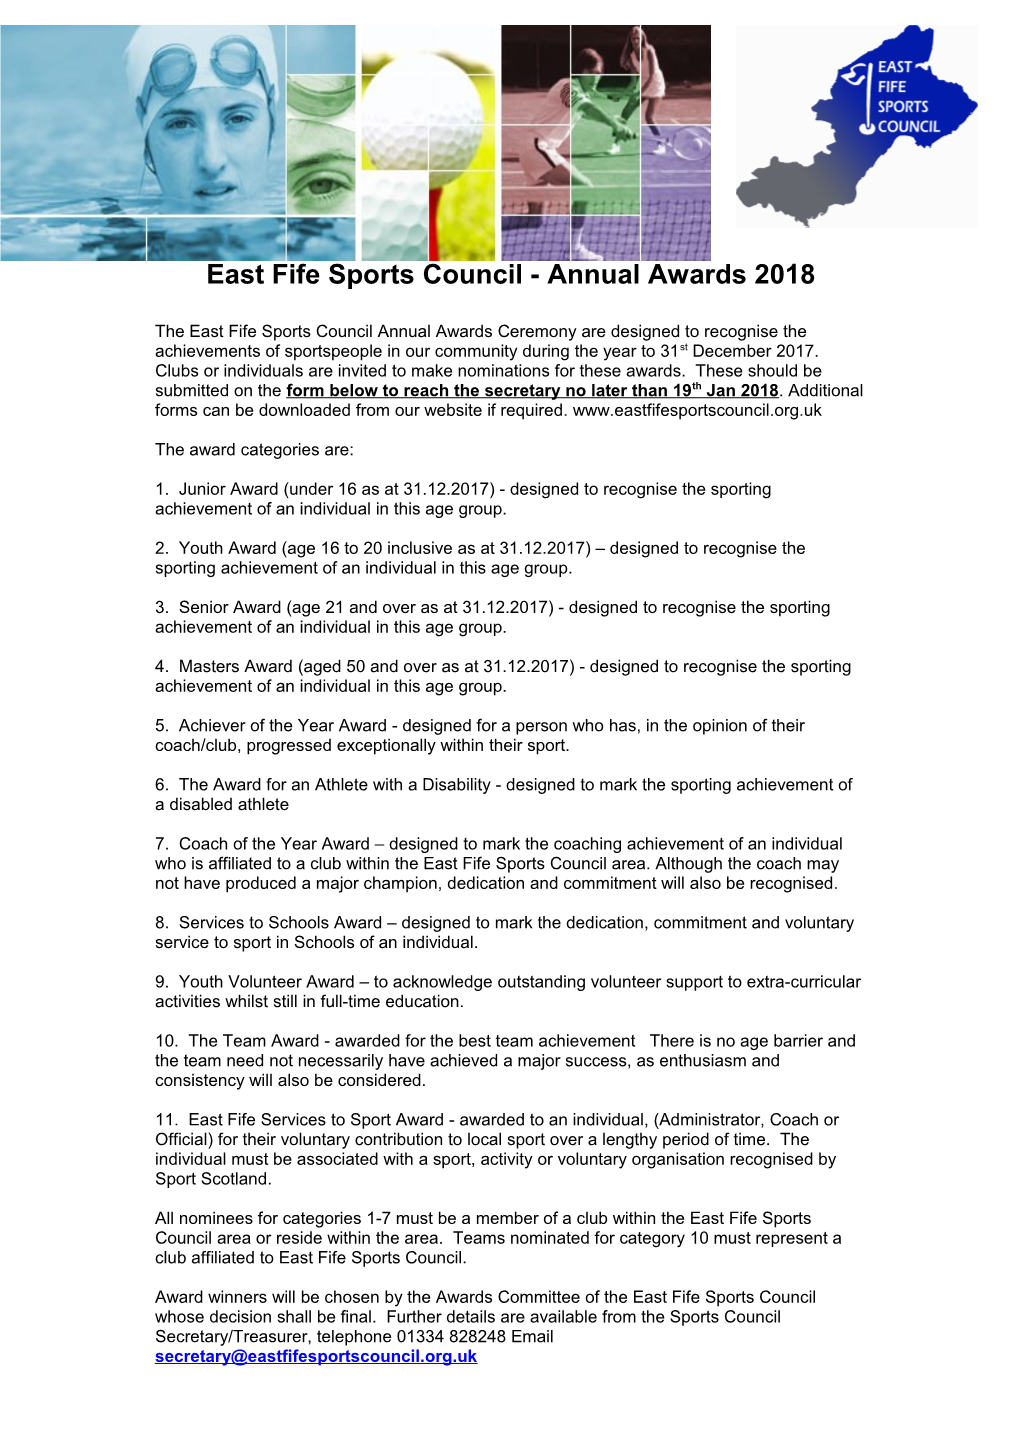 East Fife Sports Council Newsletter